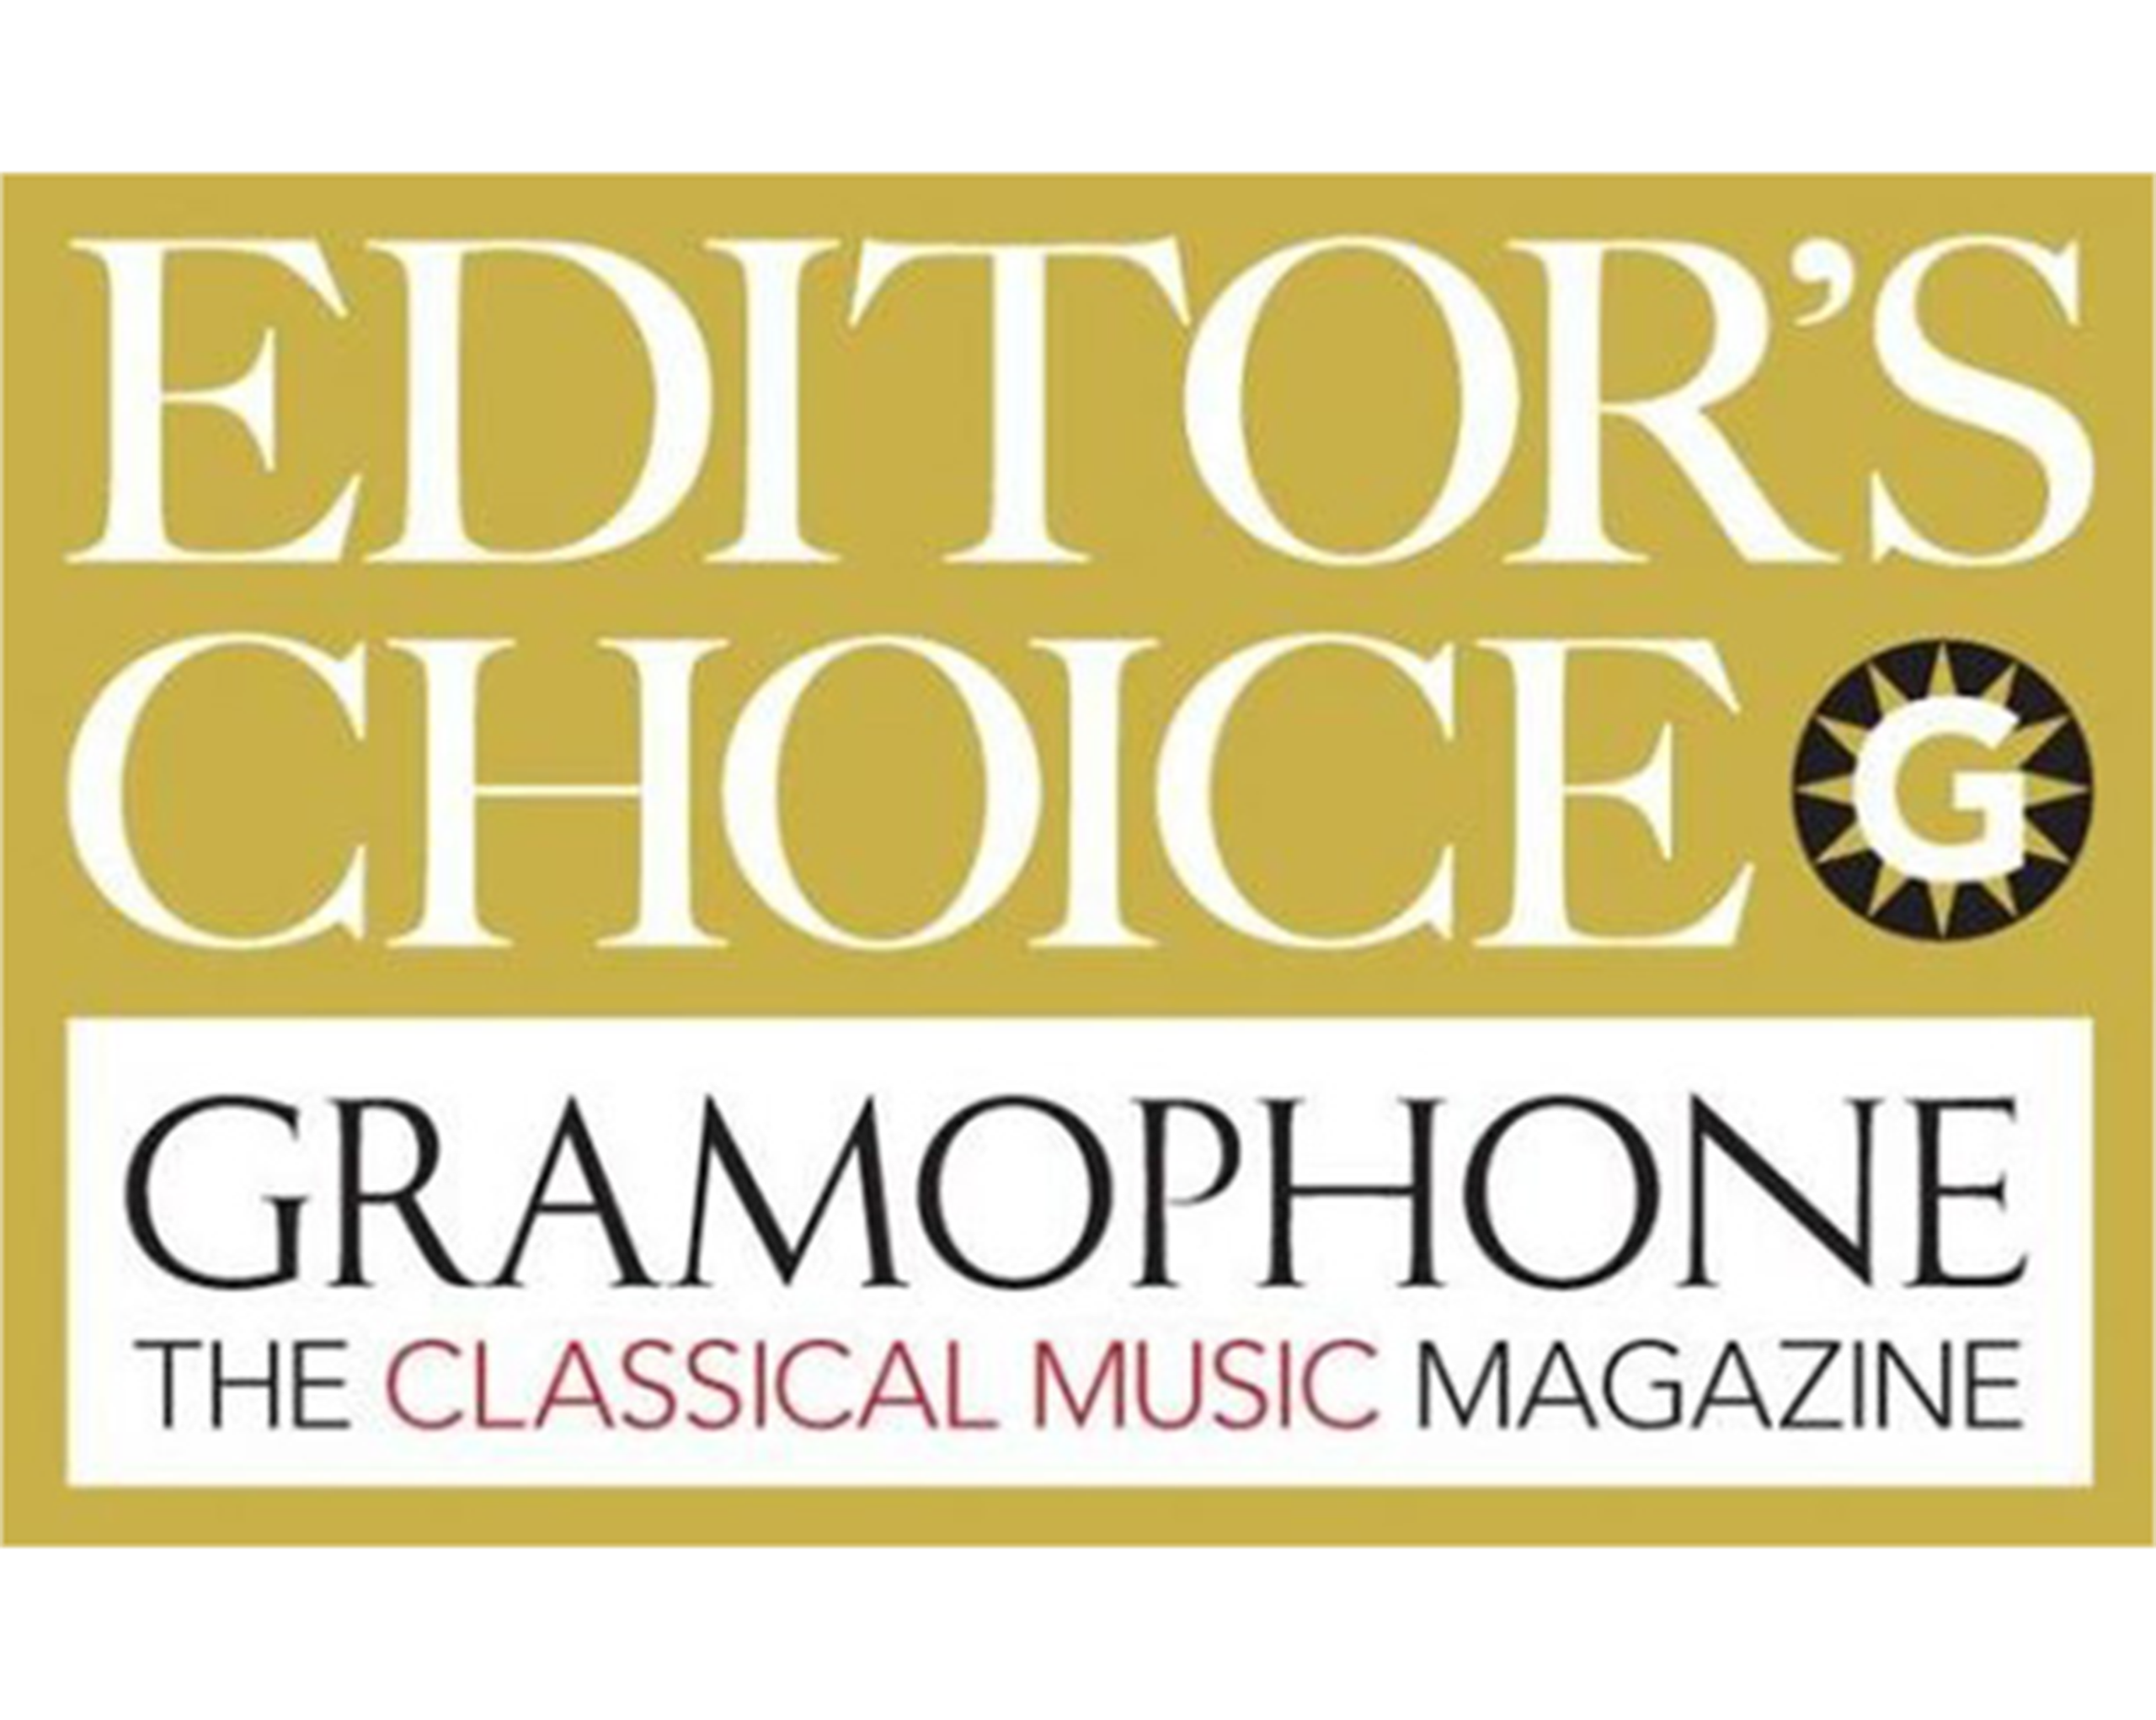 Editors Choice Gramophone logo award